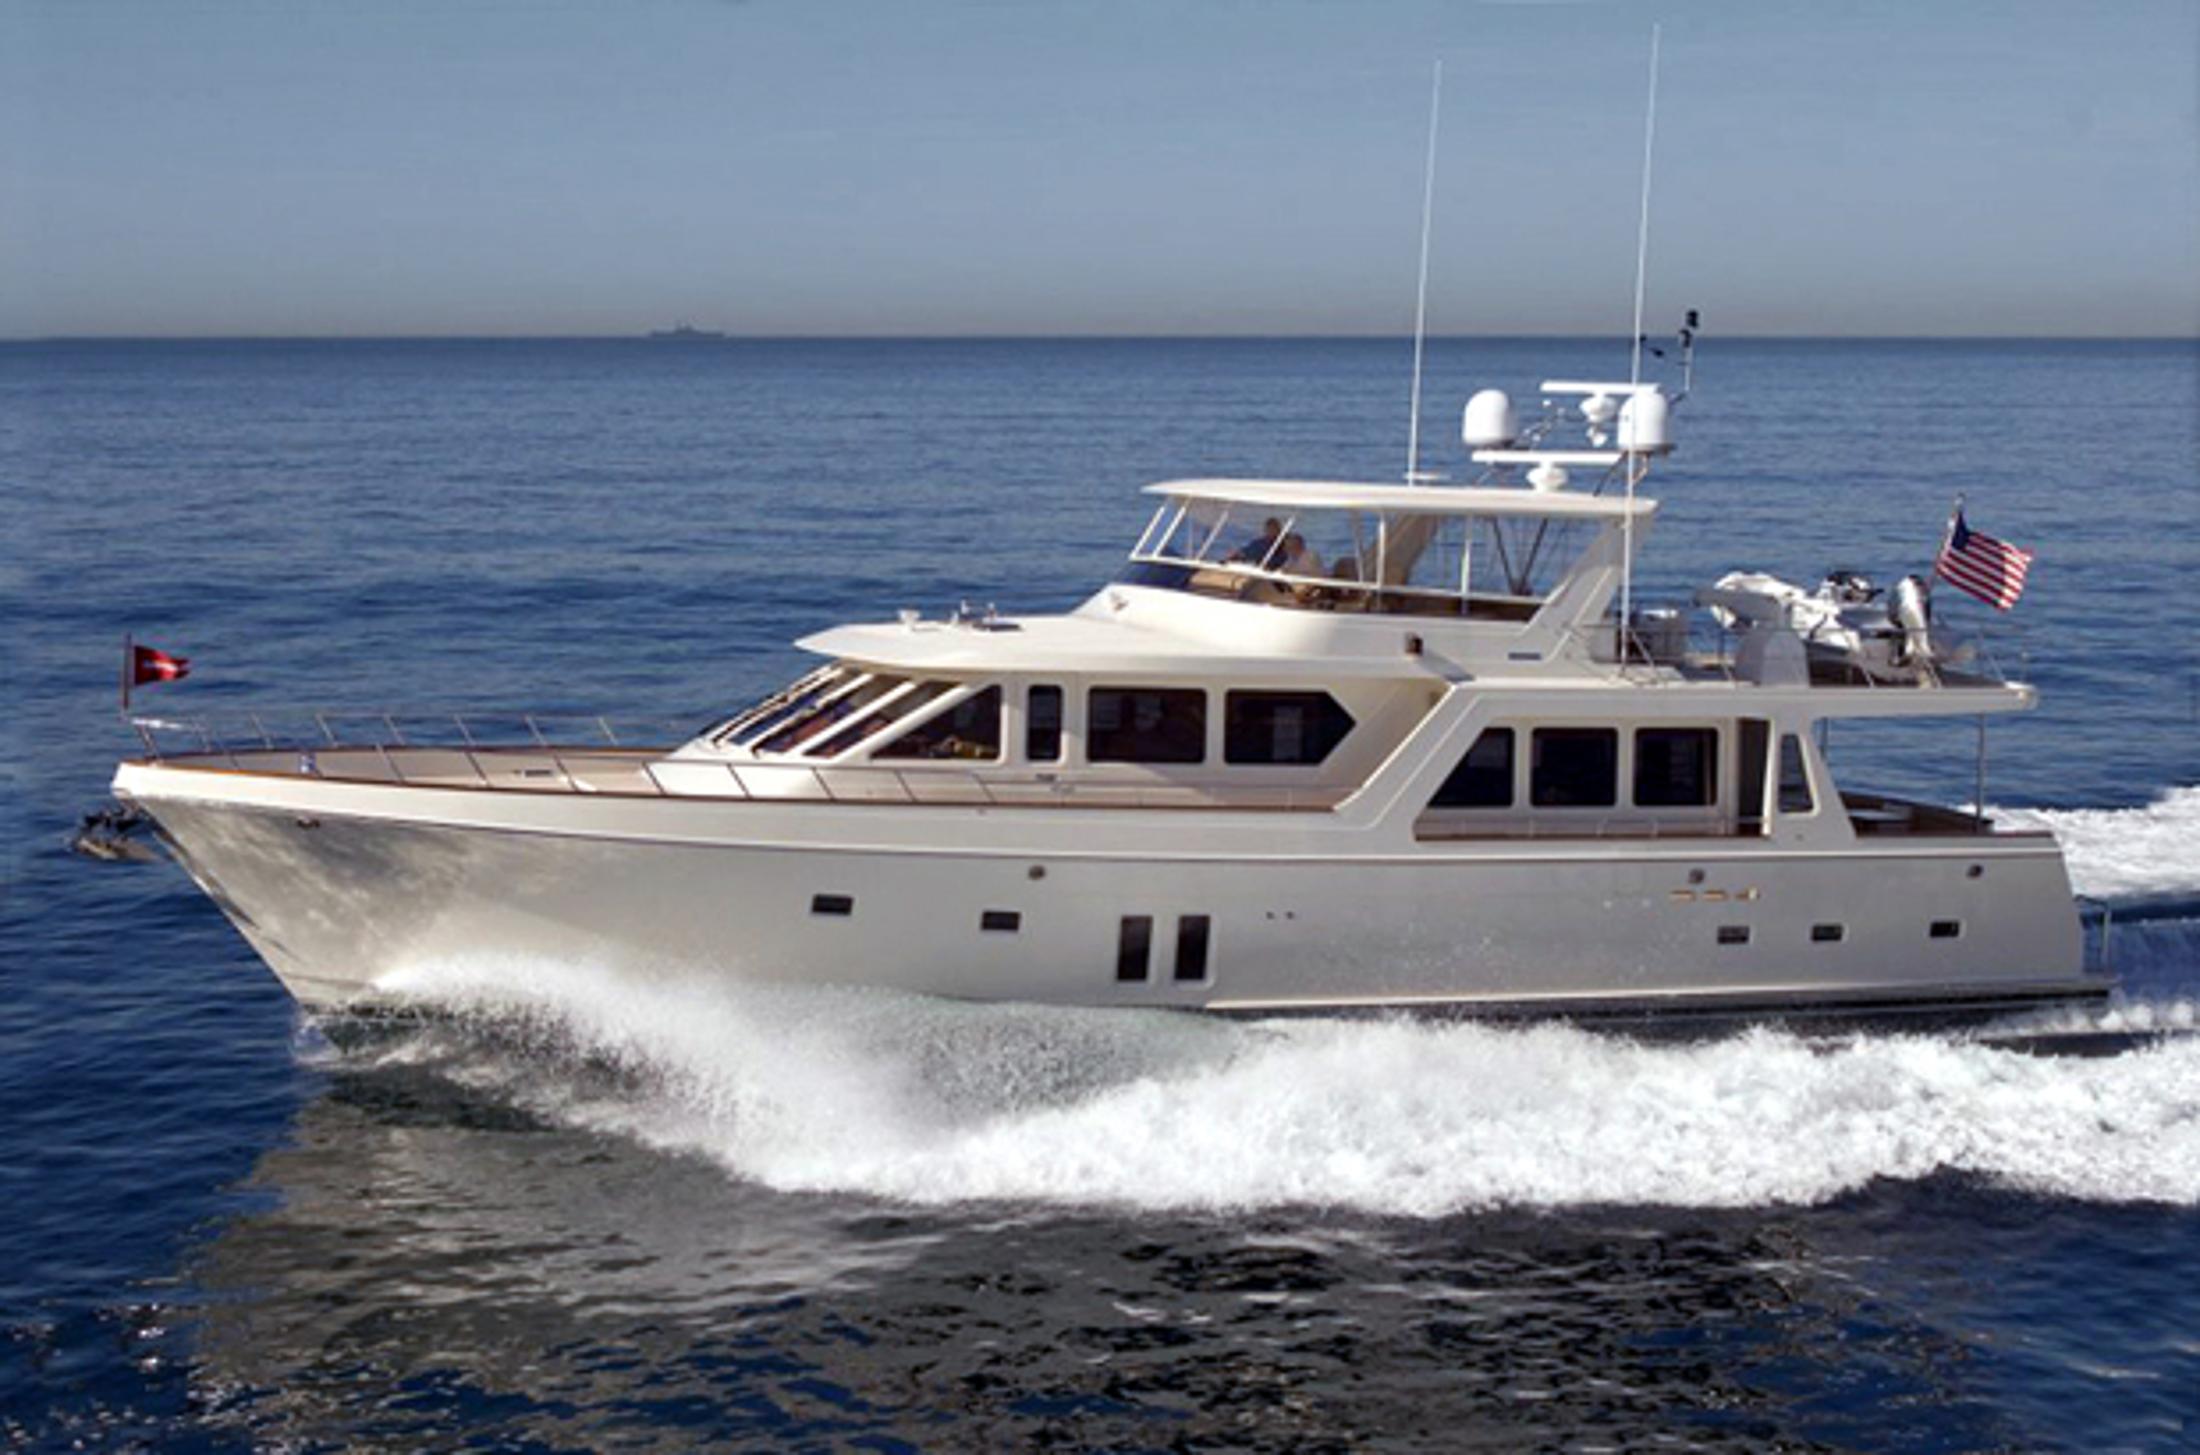 sea star yacht for sale